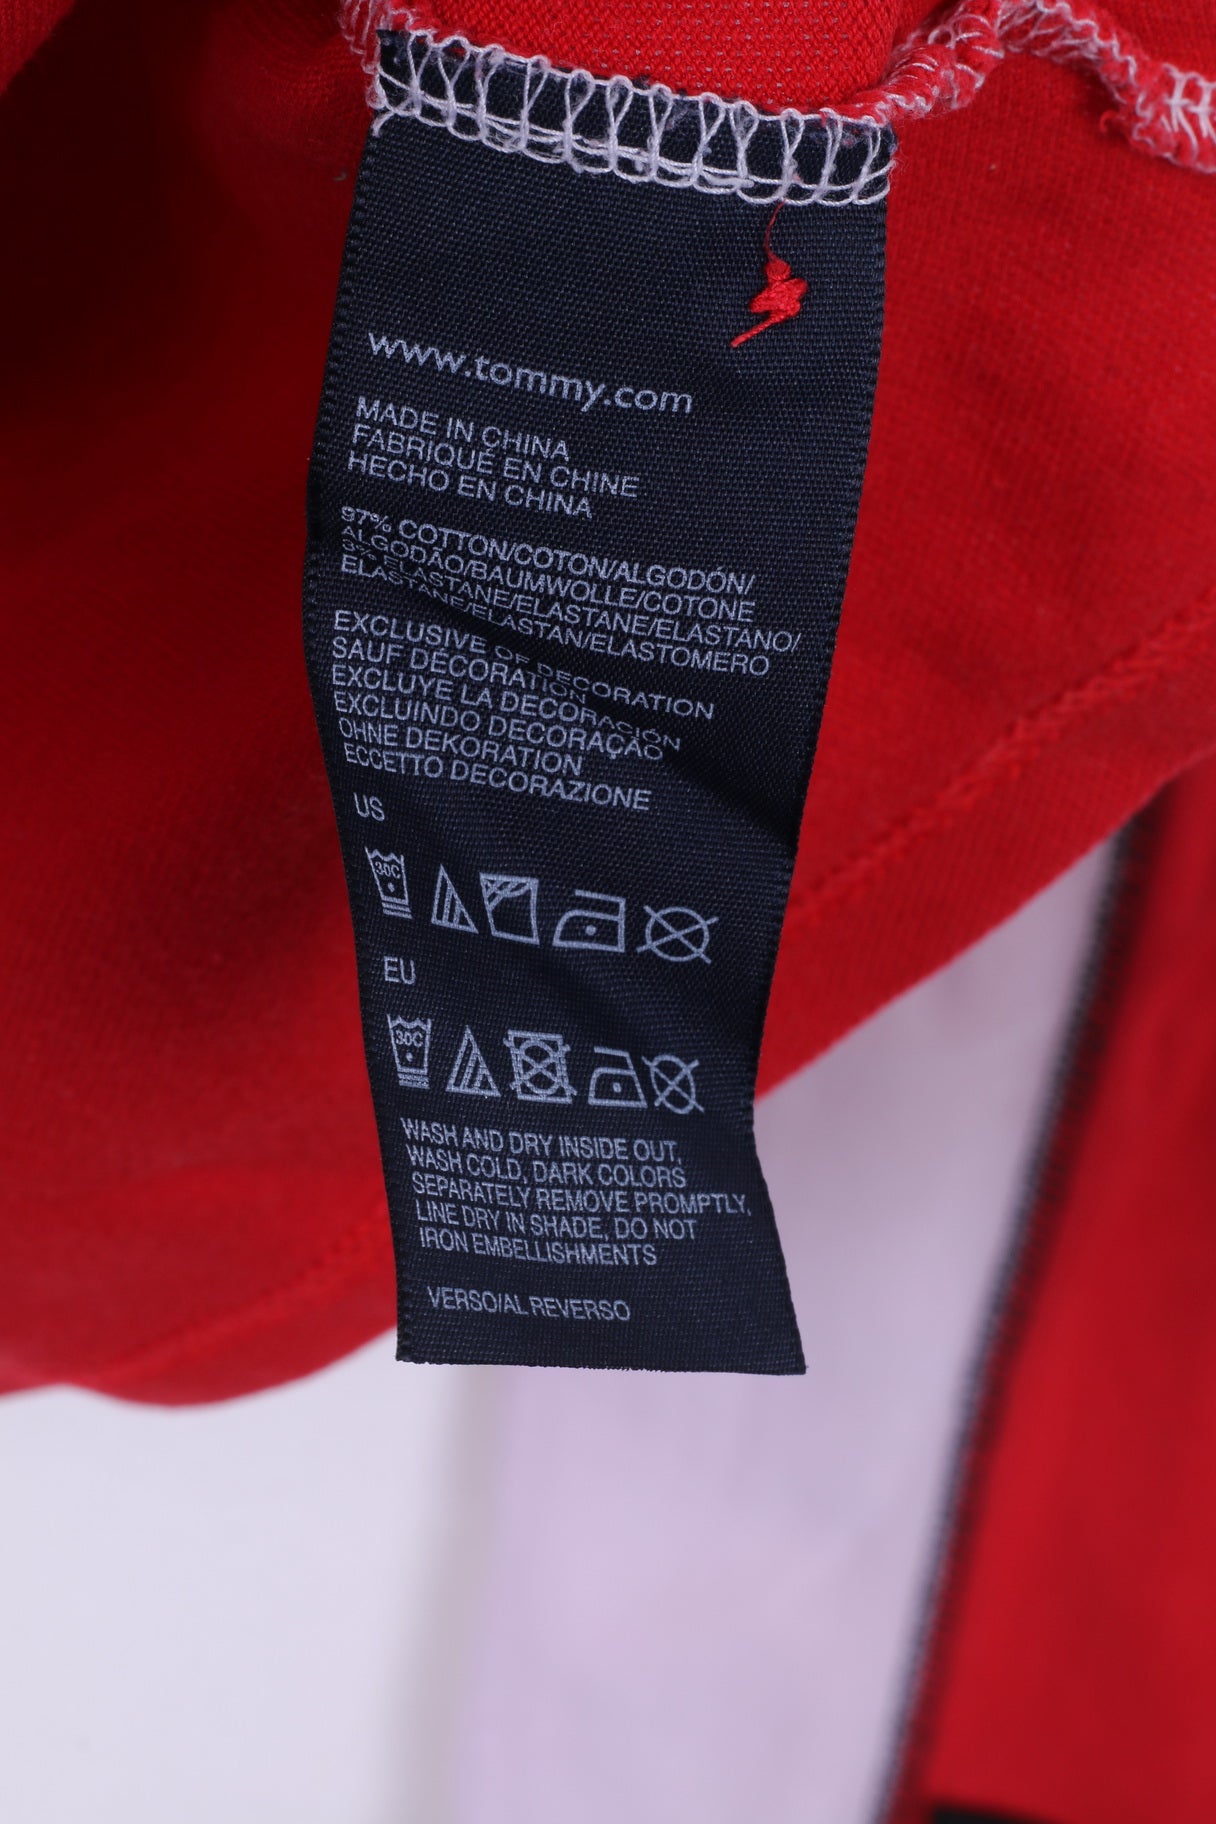 Polo Tommy Hilfiger da donna 40 L a maniche lunghe in cotone rosso Best Of The Alps 